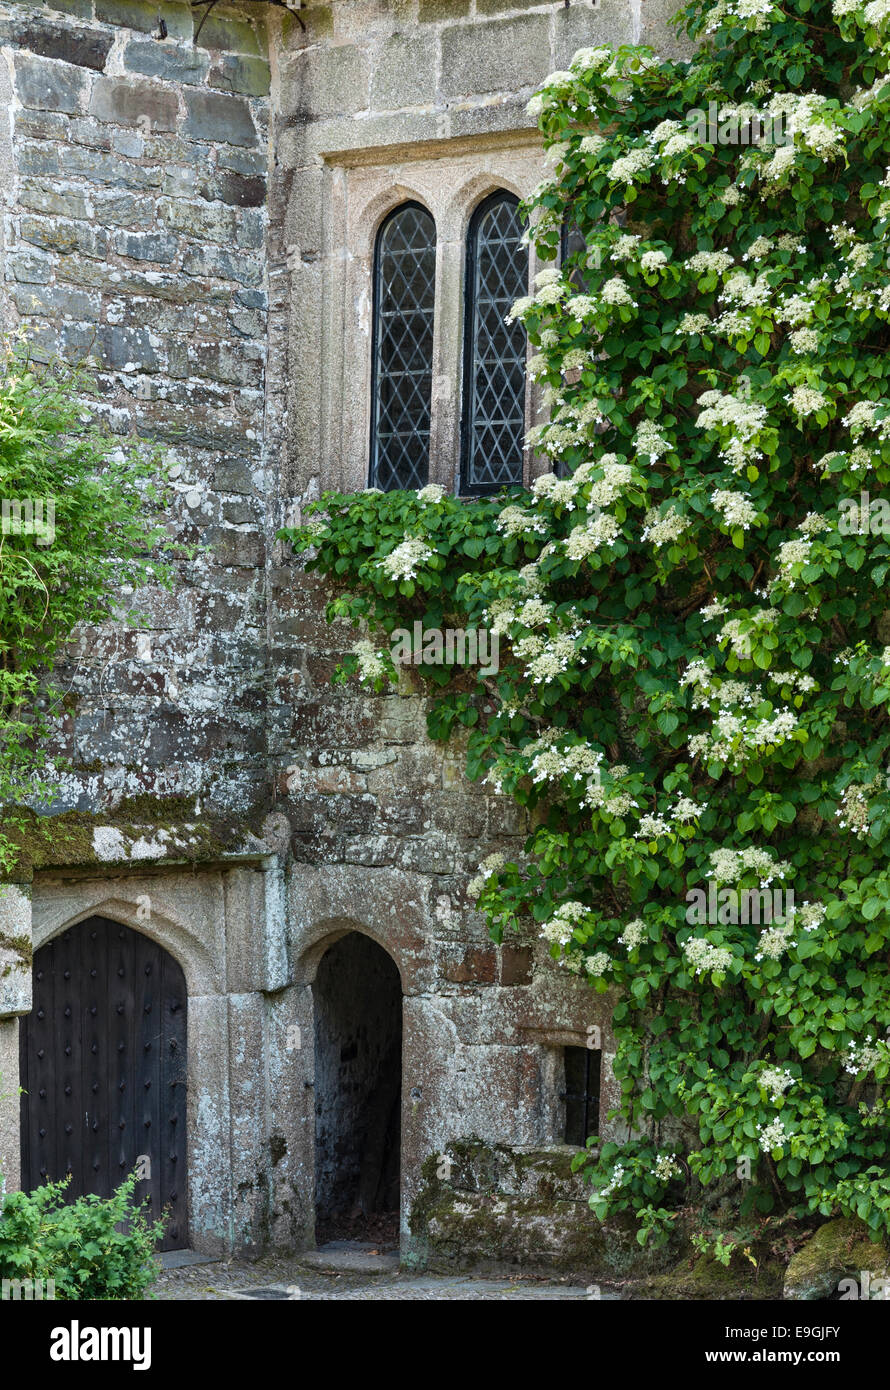 Cotehele Saltash Cornwall Uk Climbing Hydrangea In The Medieval Stock Photo Alamy